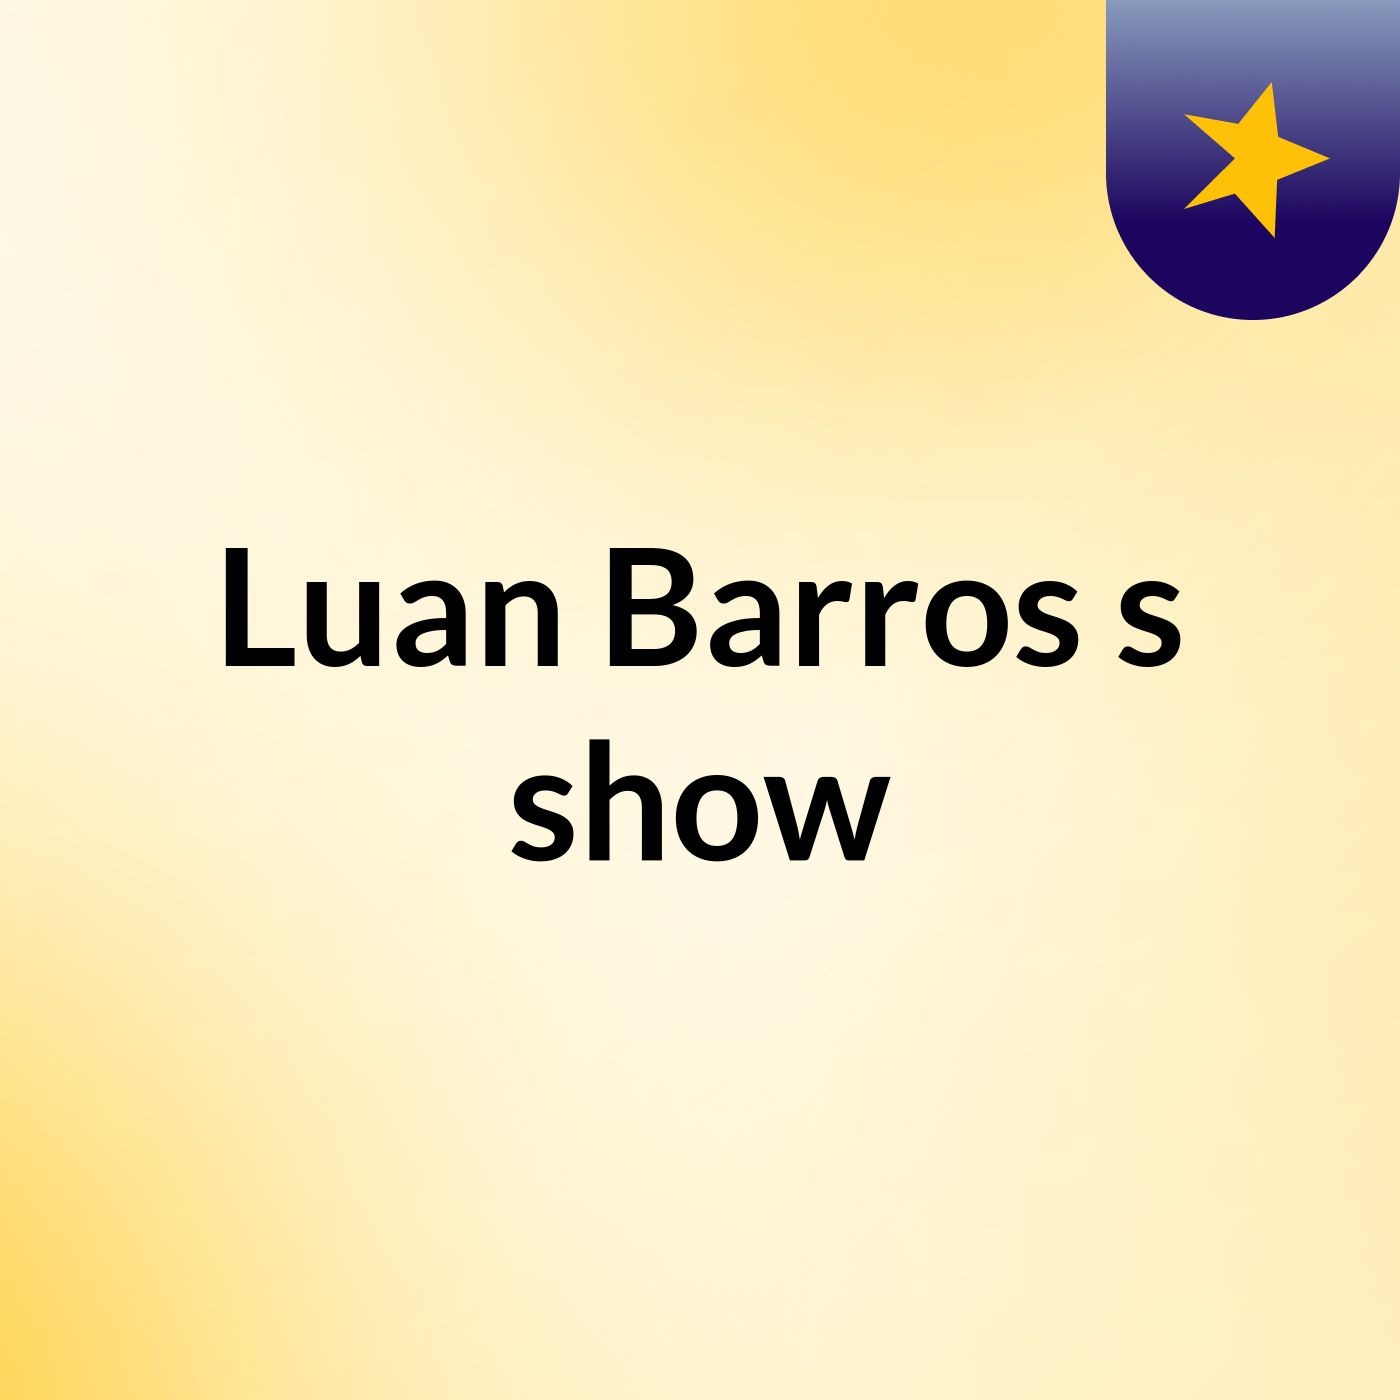 Luan Barros's show